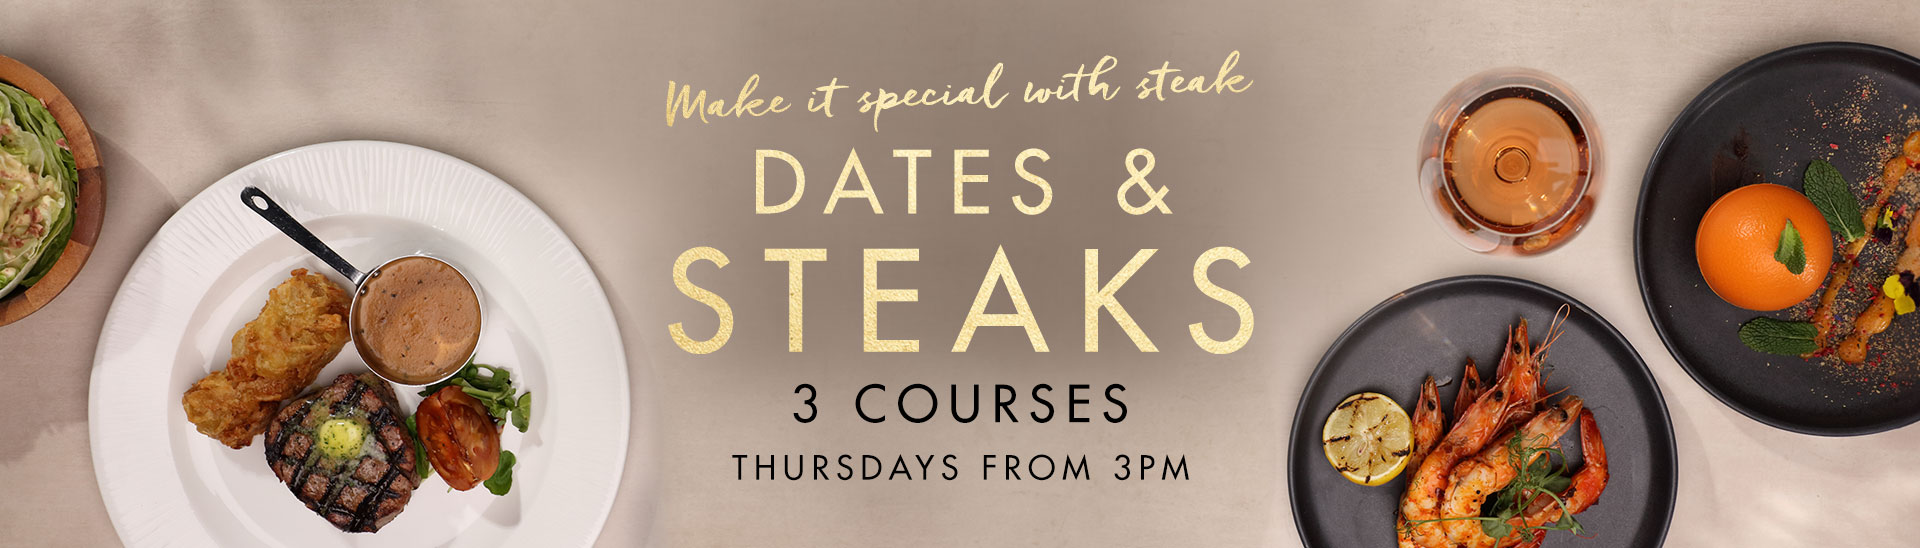 Dates & Steaks at Miller & Carter Caversham